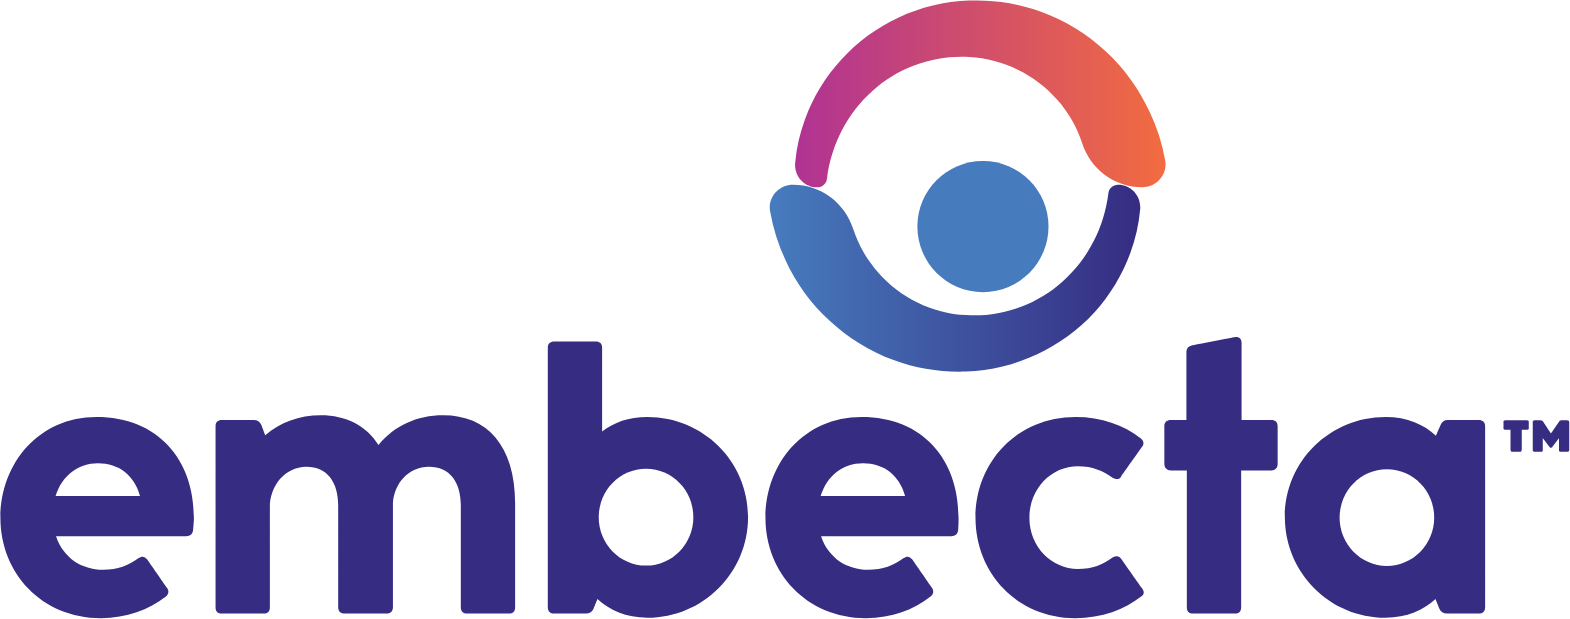 Embecta logo large (transparent PNG)